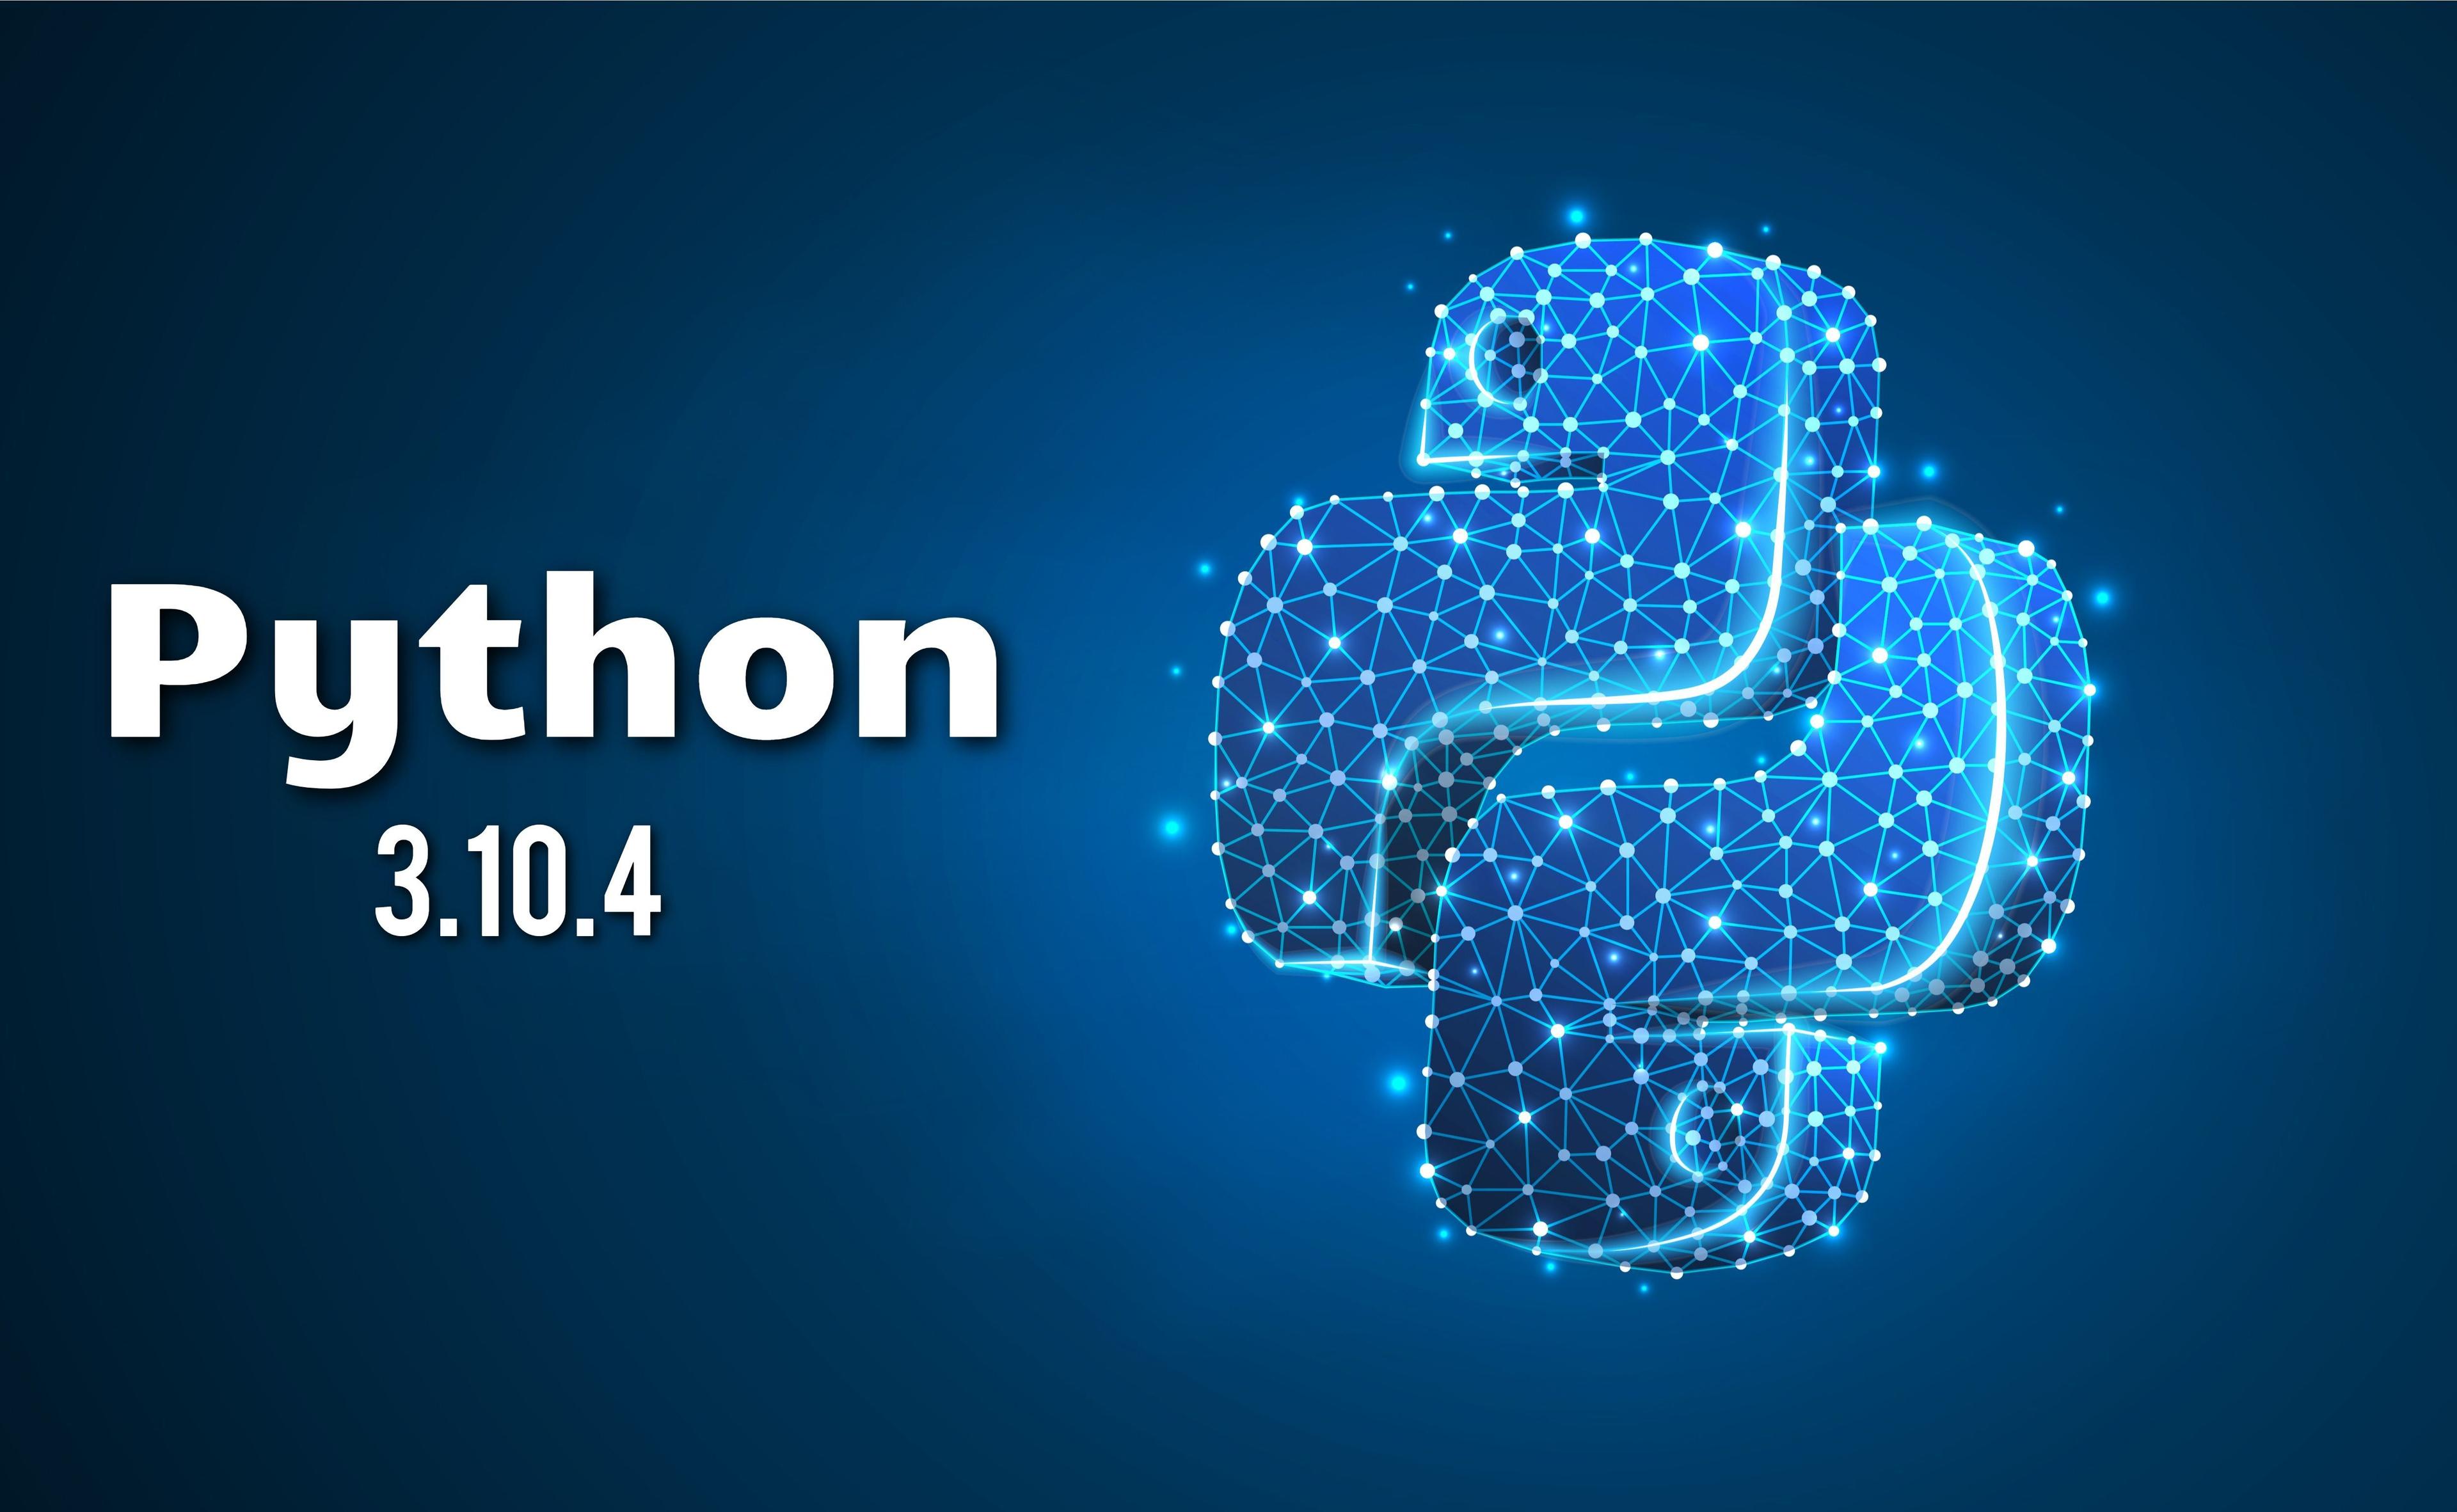 Python Latest Version - 3.10.4.